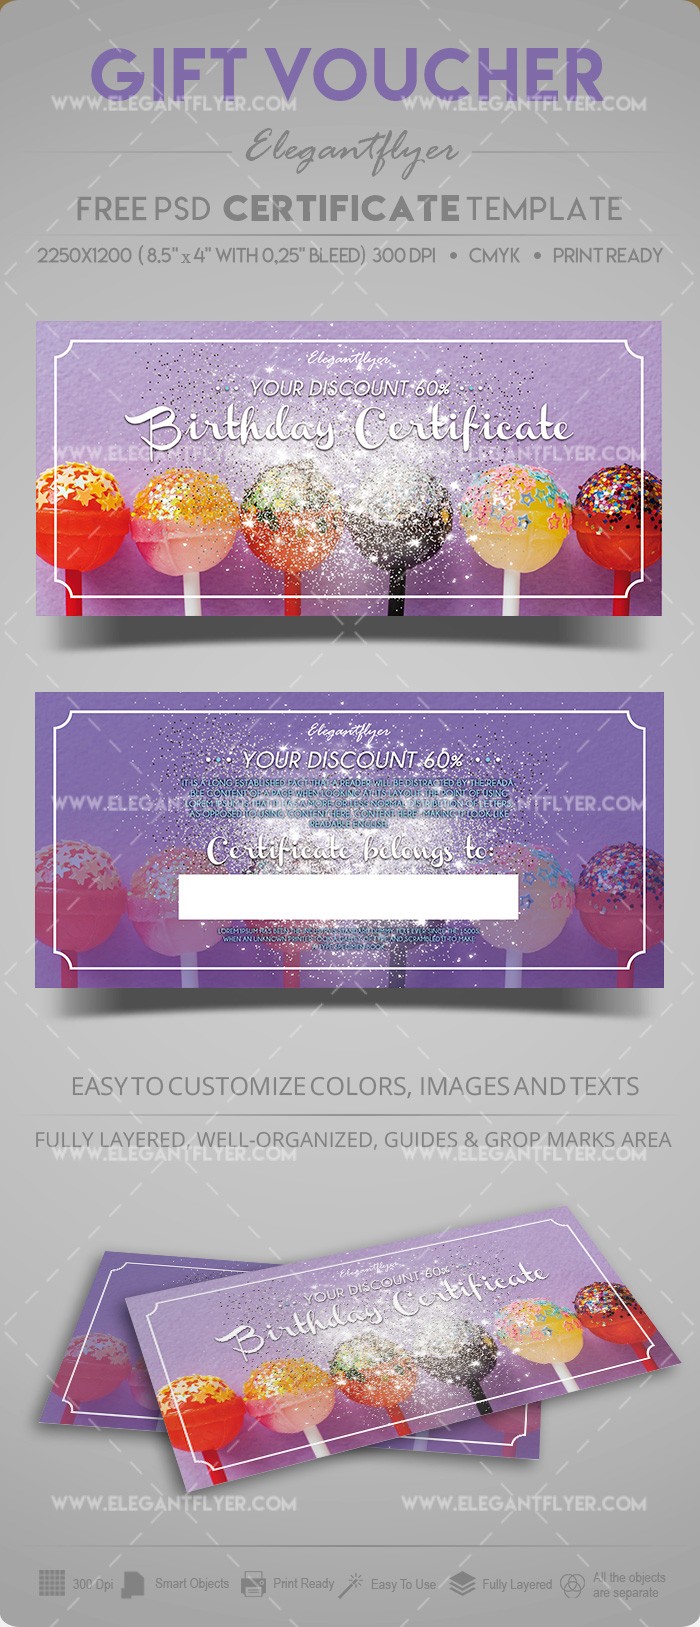 Free Birthday Gift Certificate Template in PSD by ElegantFlyer